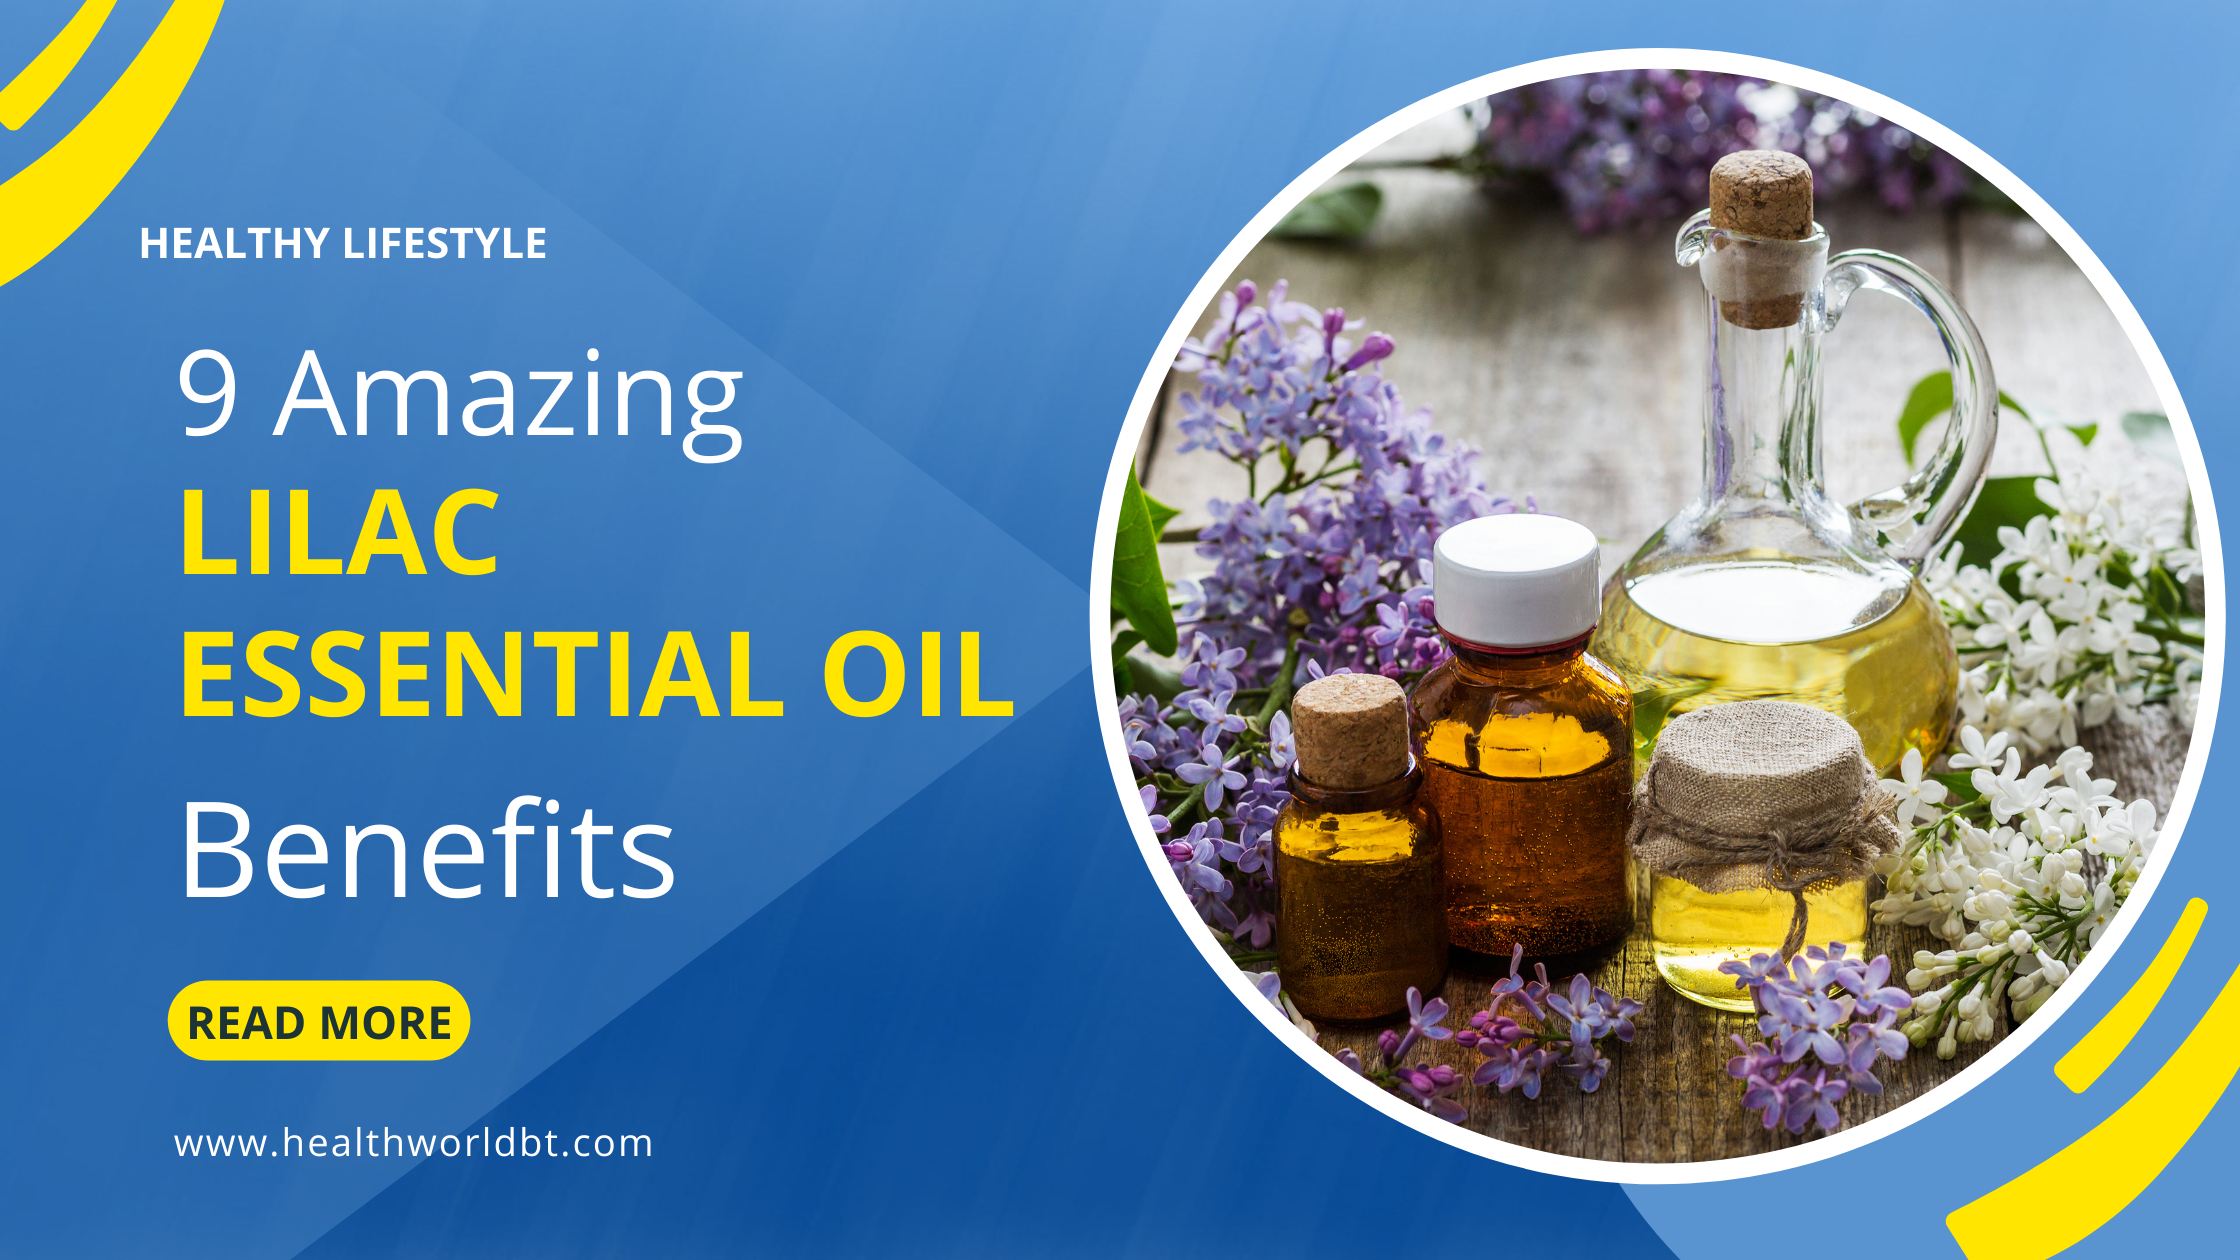 lilac essential oil